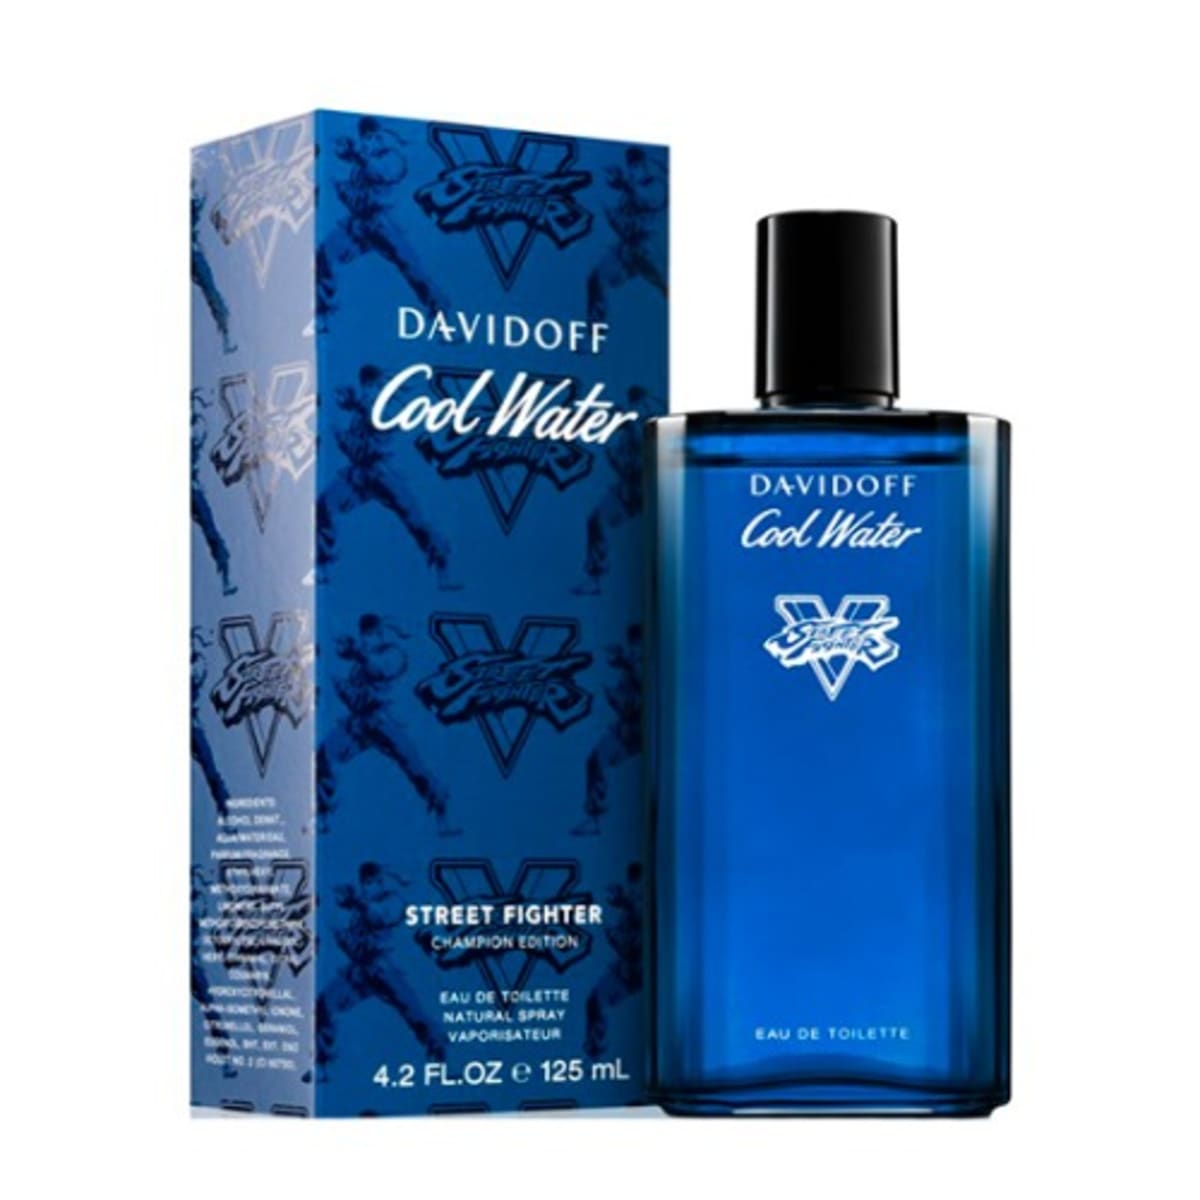 Davidoff Cool Water Street Fighter Champion Edition EDT | My Perfume Shop Australia